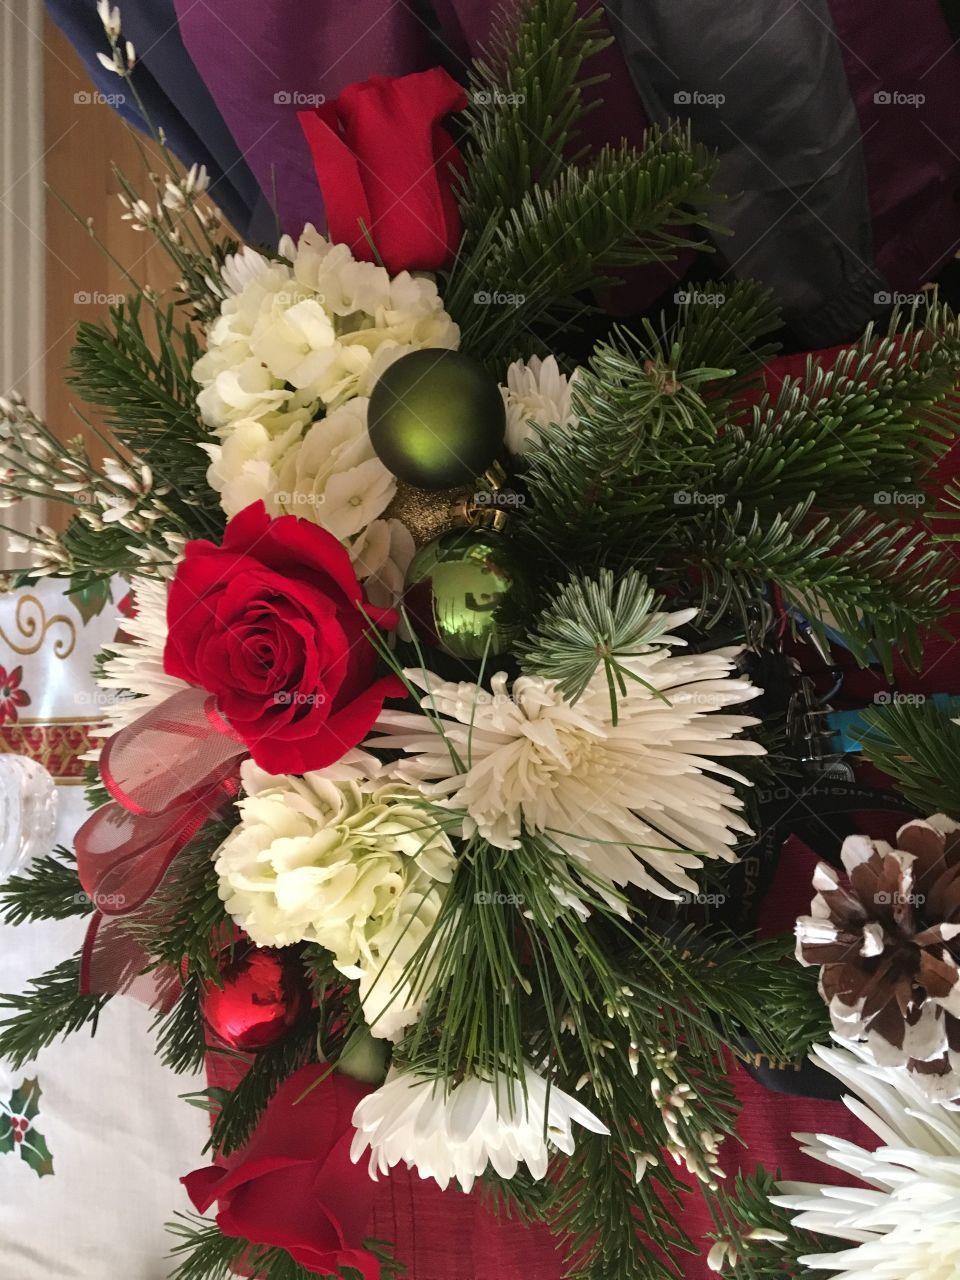 Christmas decorations Christmas greens pine princess pine, red roses red bows white hydrangeas